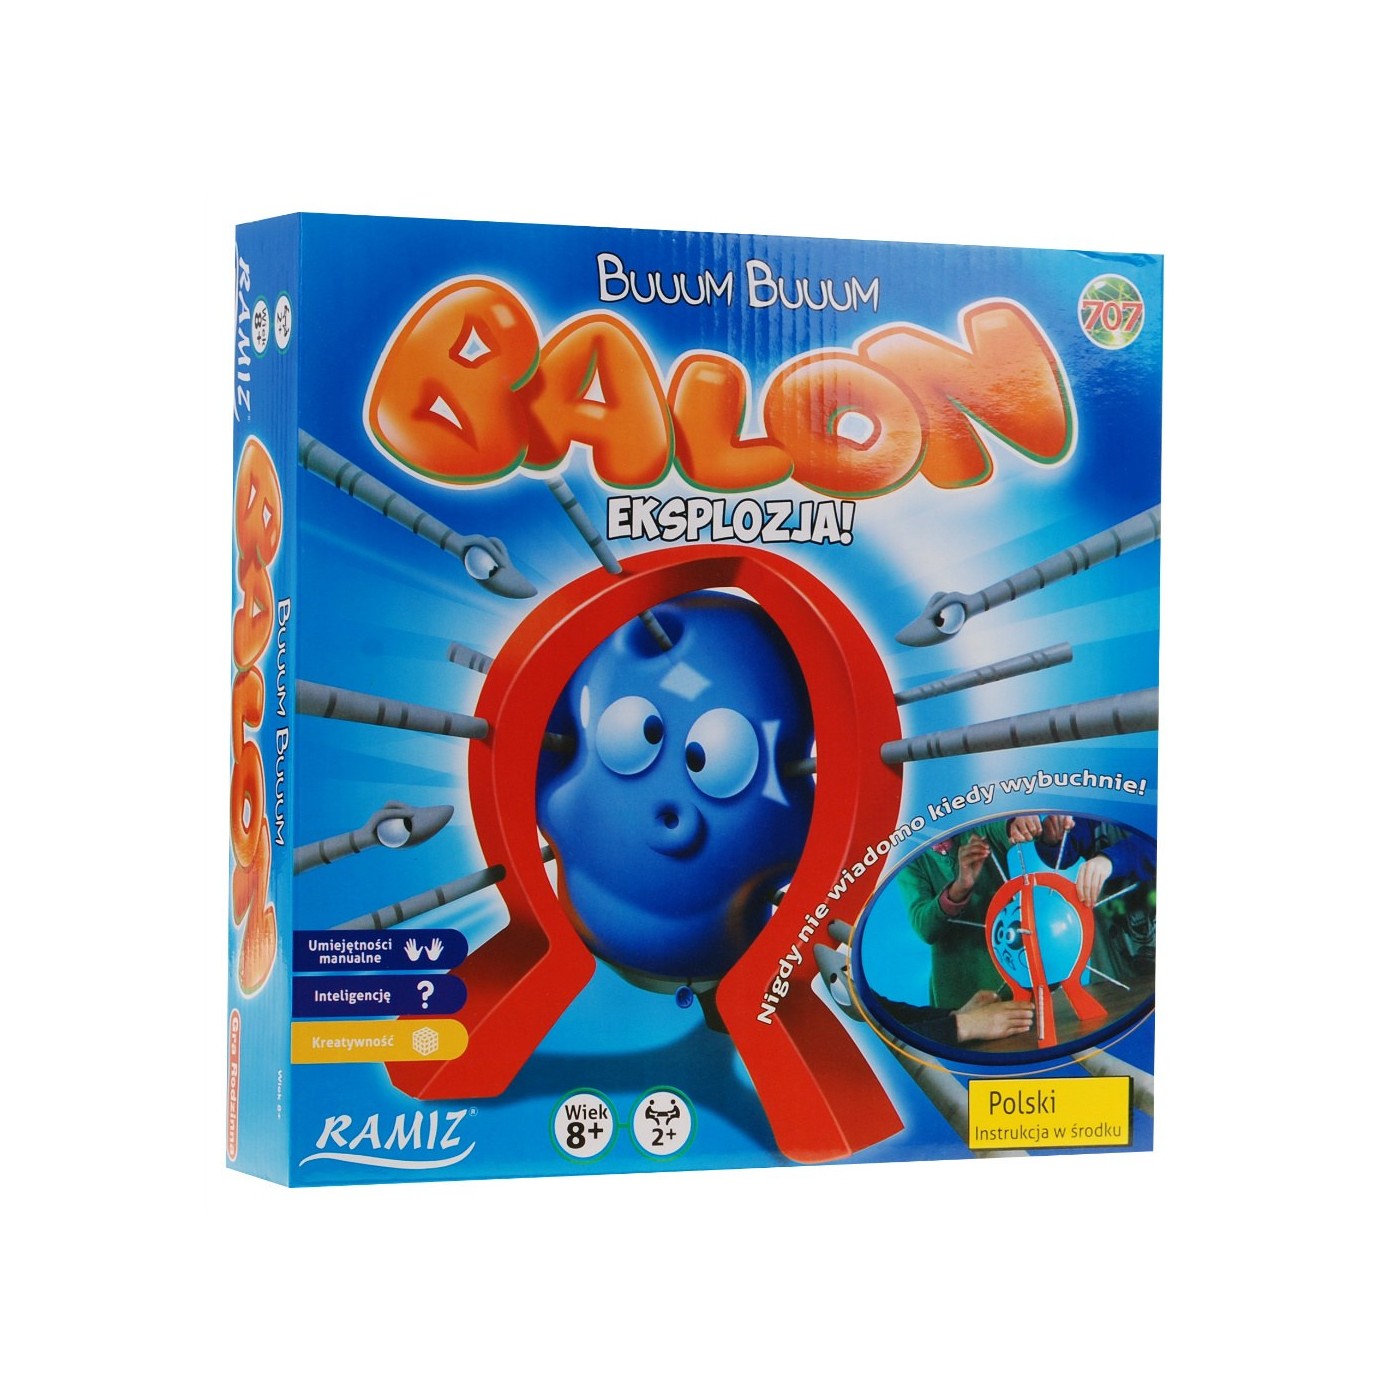 Bum Bum Baloon game